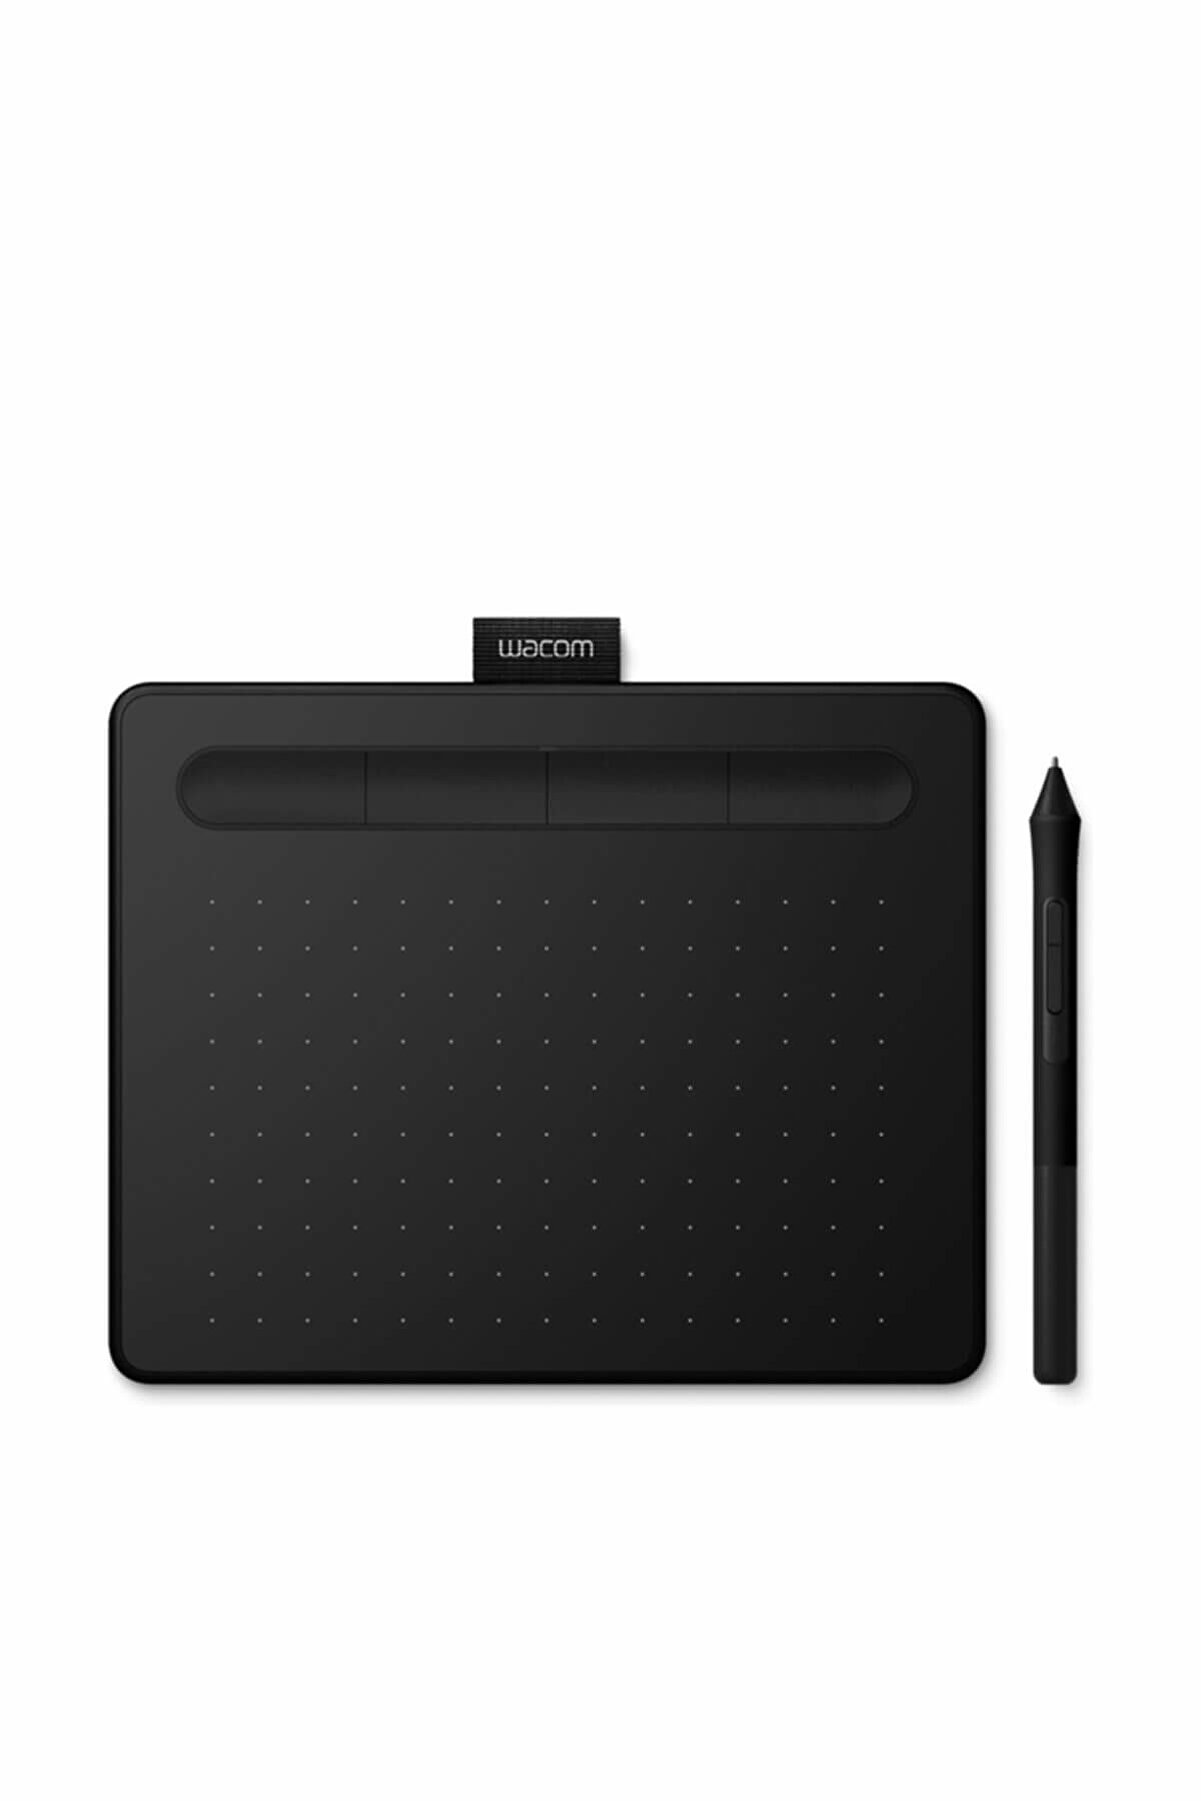 Wacom Intuos Small(CTL-4100K-N) 7.87x6.3inç 4096 Seviye Grafik Tablet Win/mac/android Uyumlu Corel